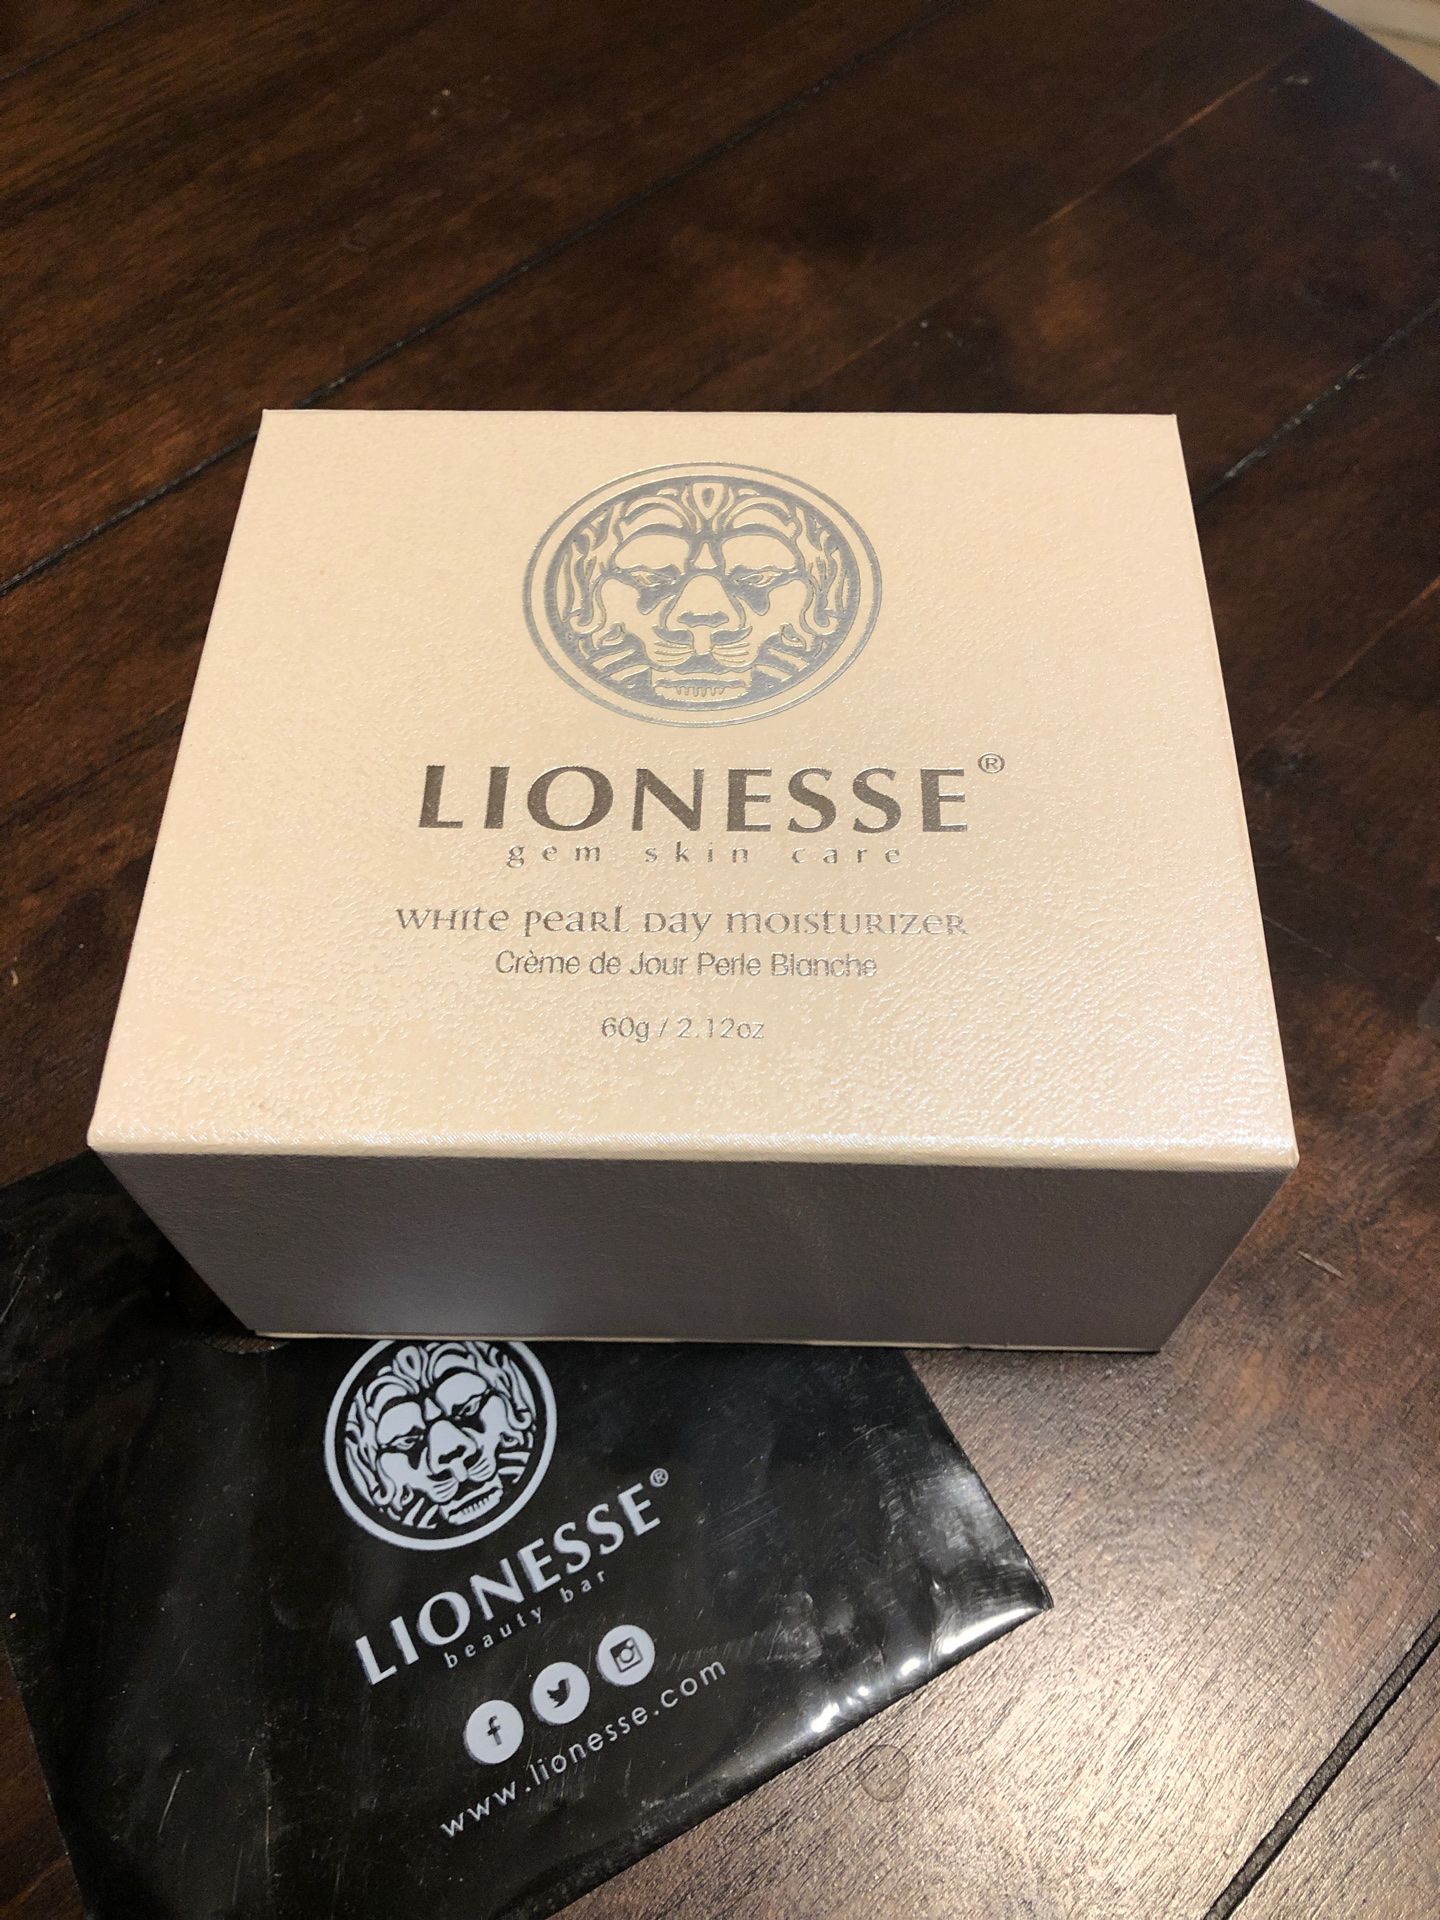 Lionesses gem skin care White pearl day moisturizer